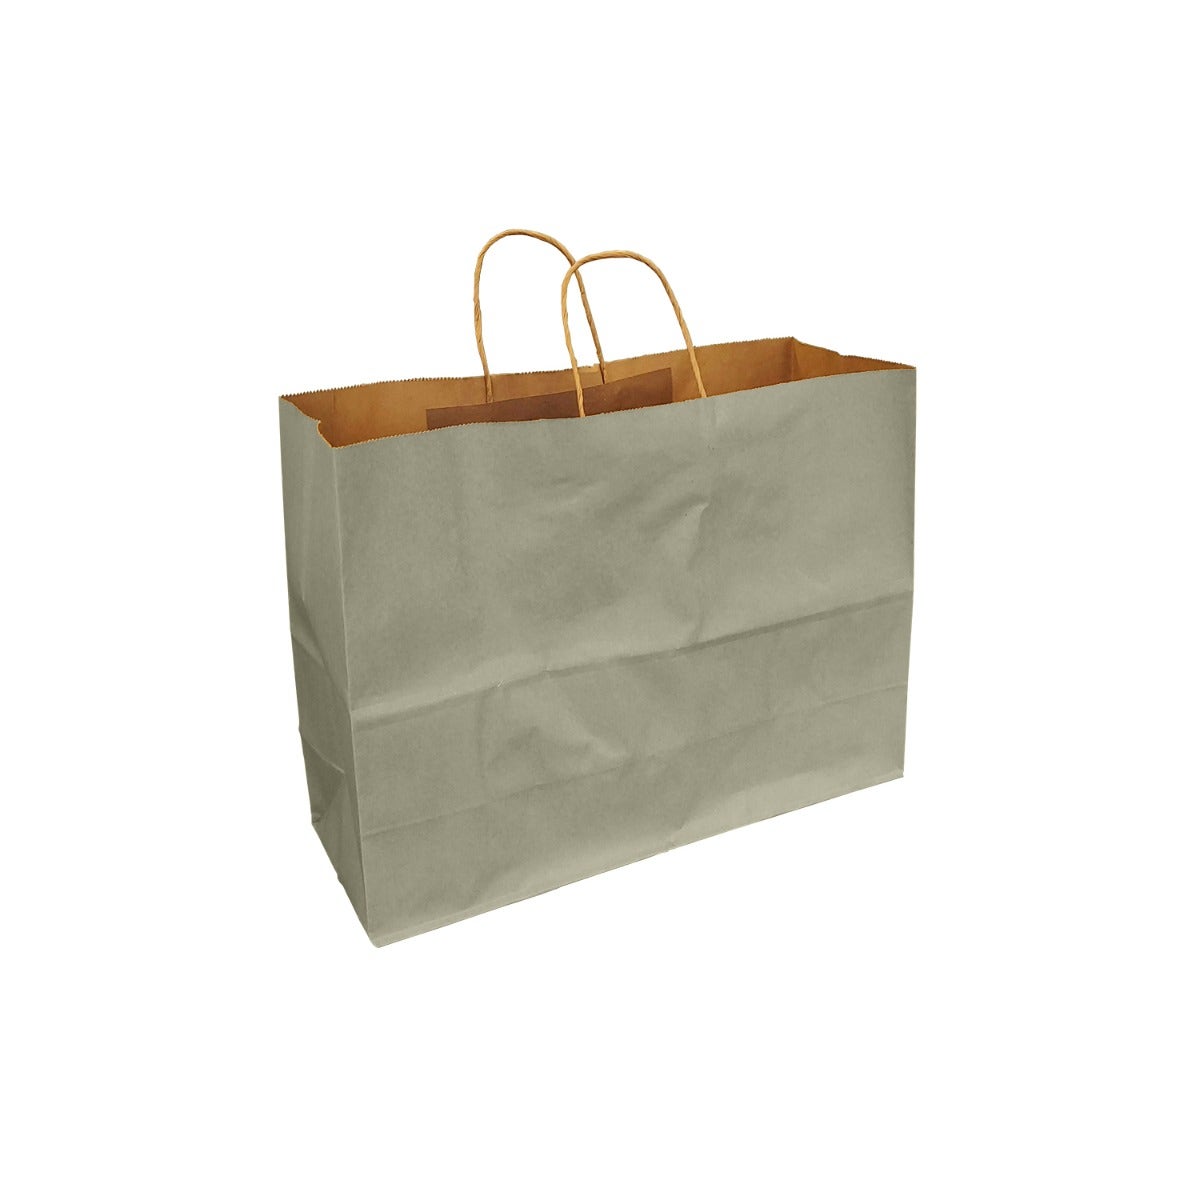 Silver Pewter 100% Recycled Kraft Paper Bags With Handles - Eddie's Hang-Up Display Ltd.